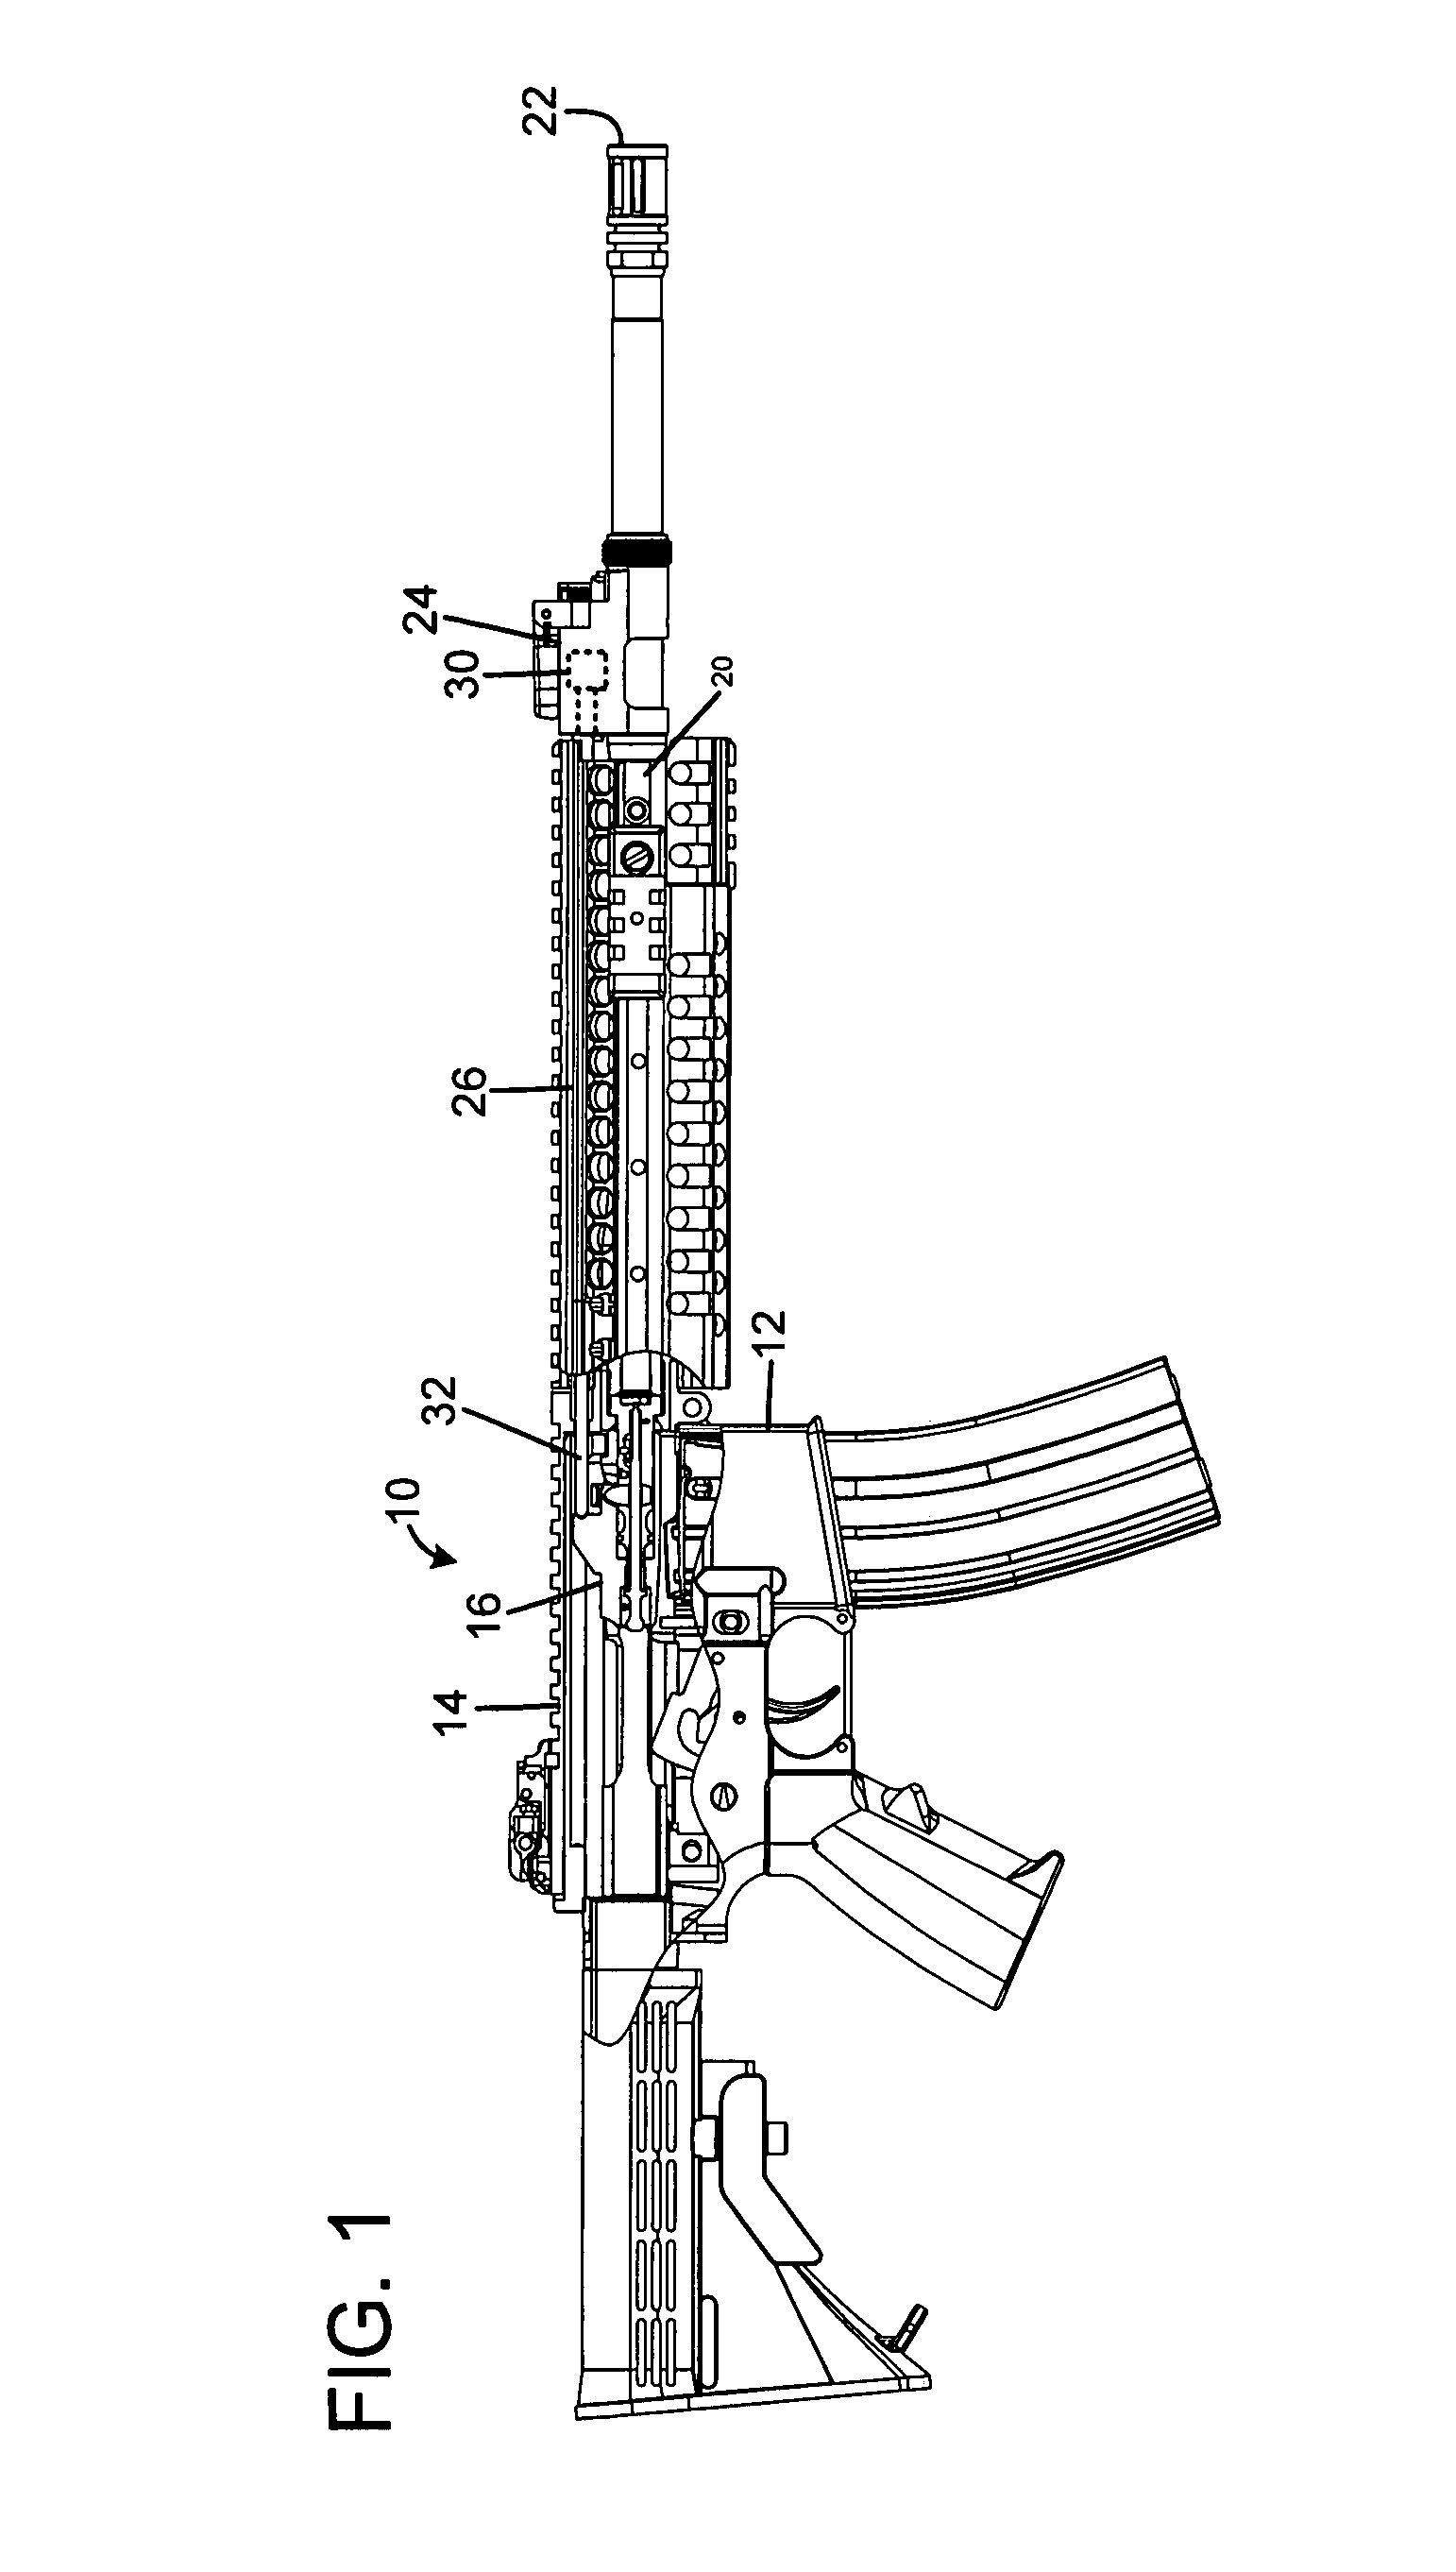 Auto-loading firearm with gas piston facility